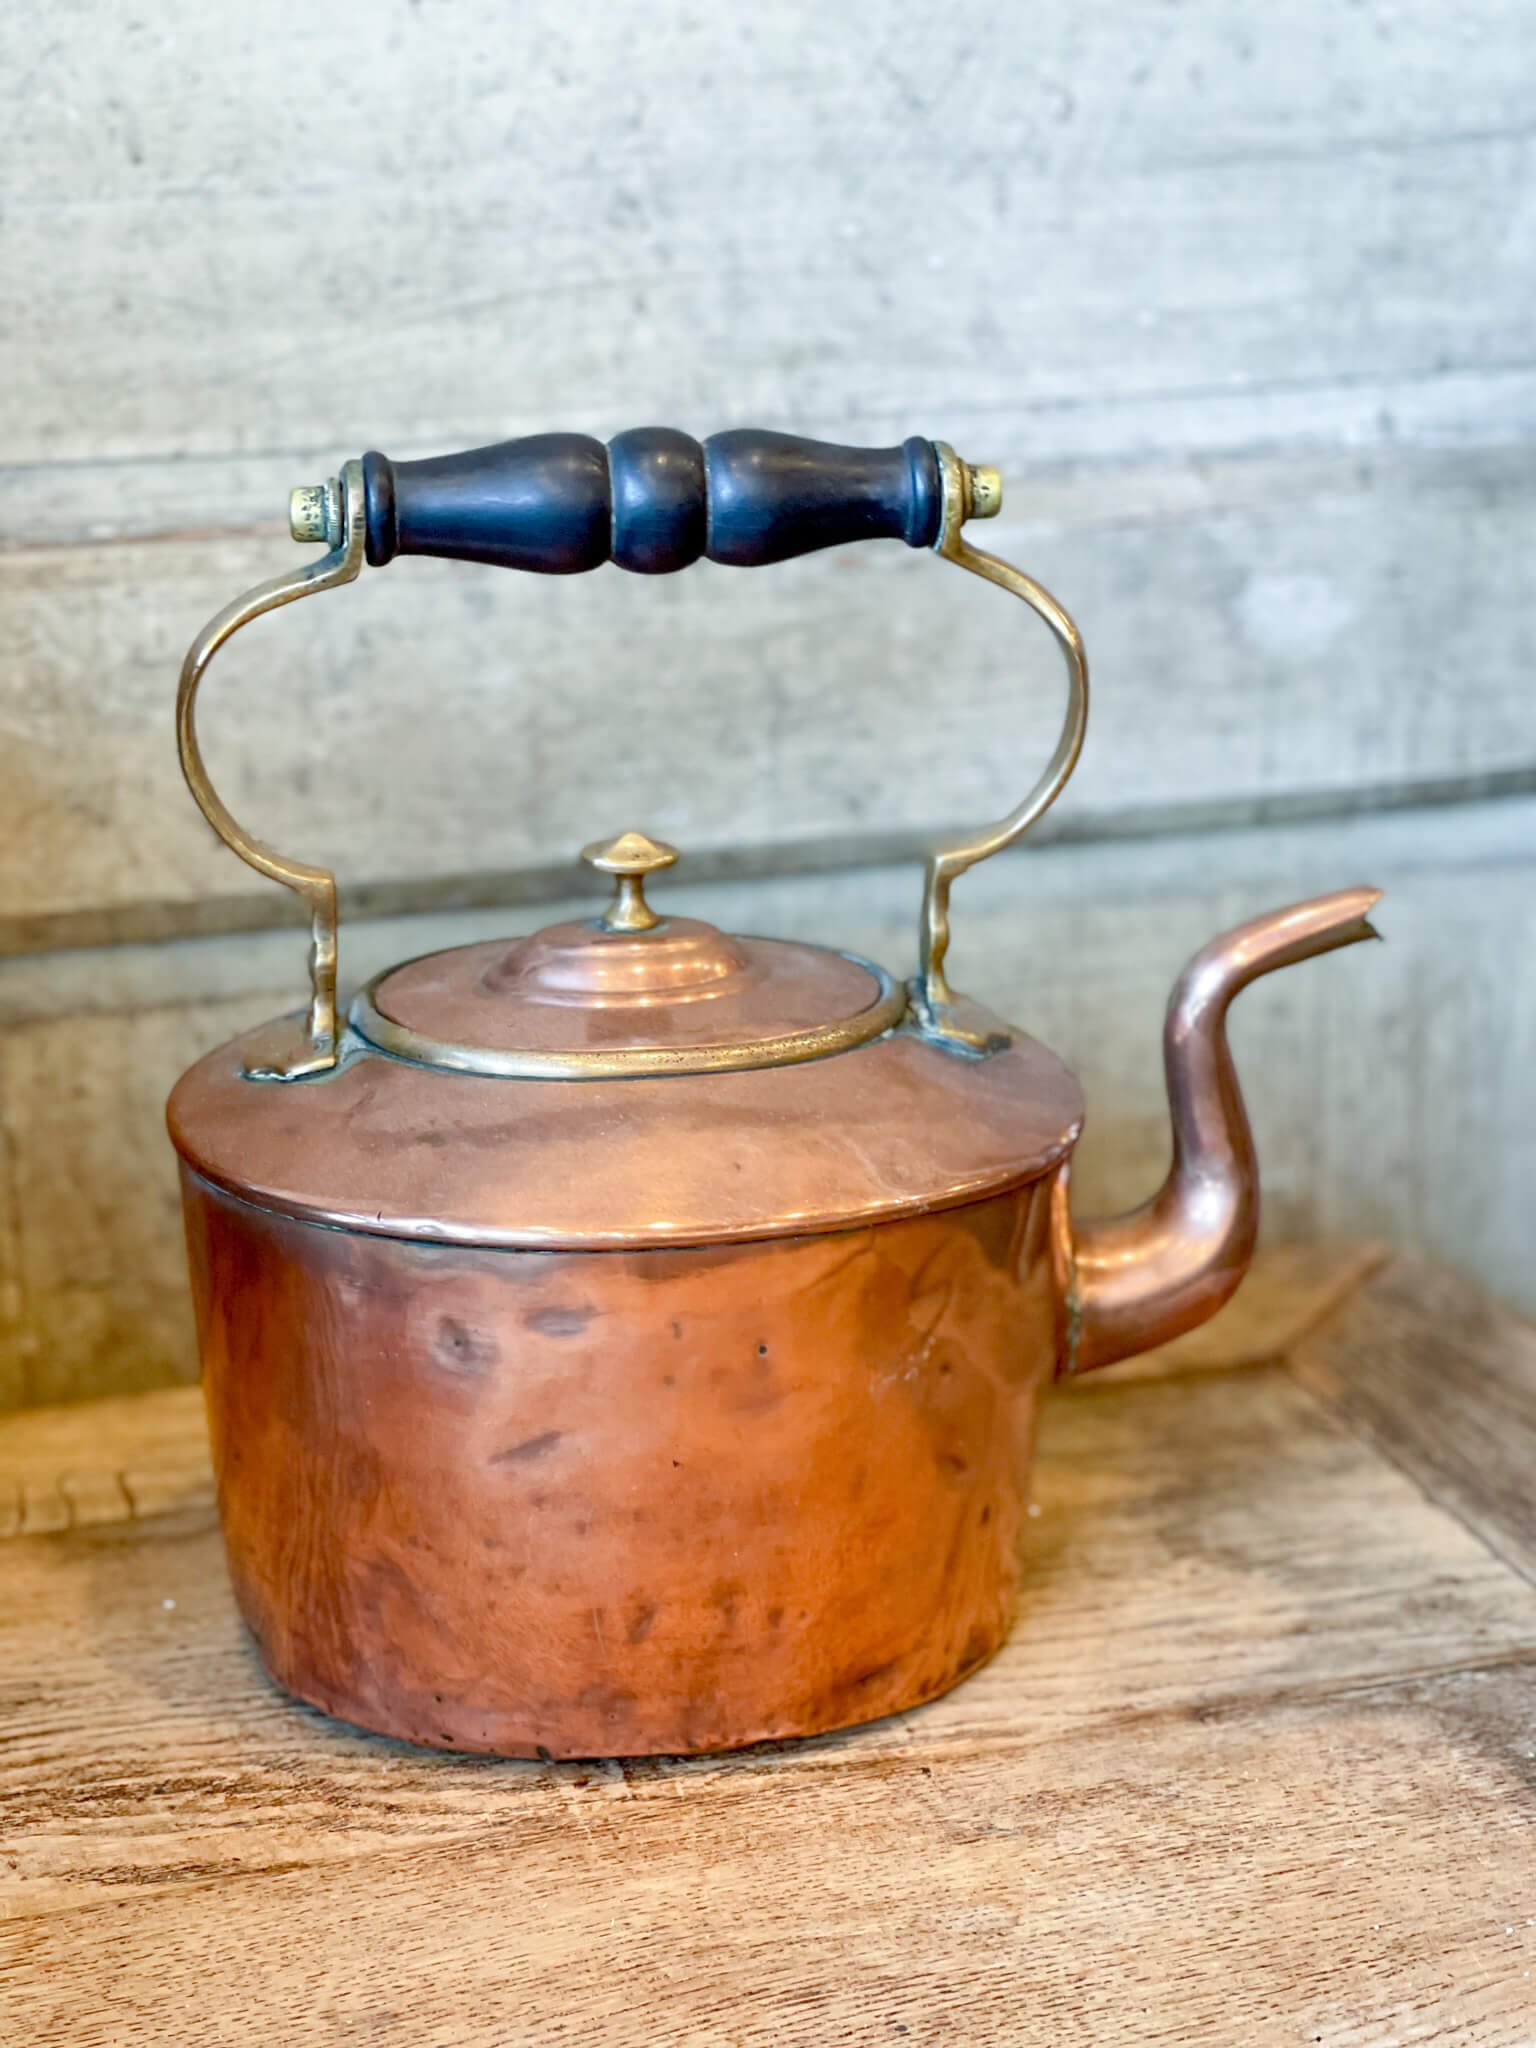 http://images.squarespace-cdn.com/content/v1/5992e51a6a49634687ed5b48/1697079597147-AB2PHKZ6XTJN9XZR13MJ/antique-copper-teapot-tea-kettle-black-wood-handle+%281%29.jpg